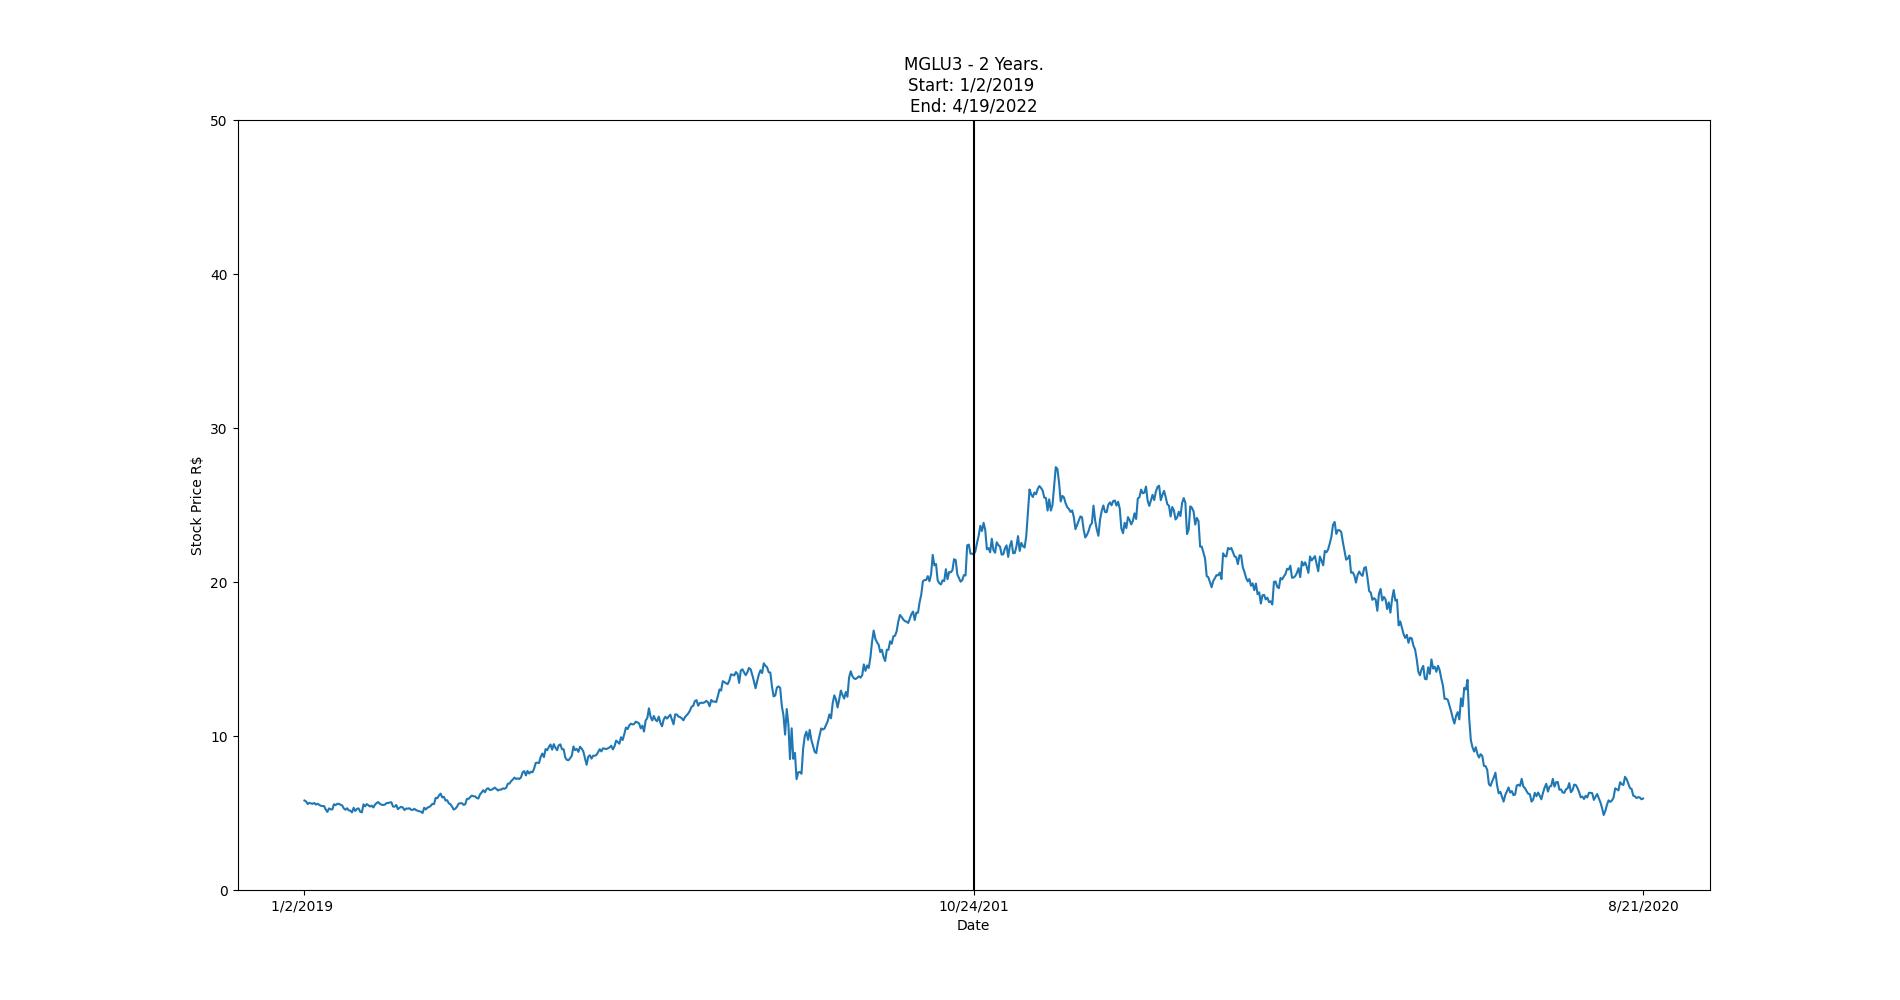 Figura 2:MGLU3 Stock Price, intervalo de dois anos.